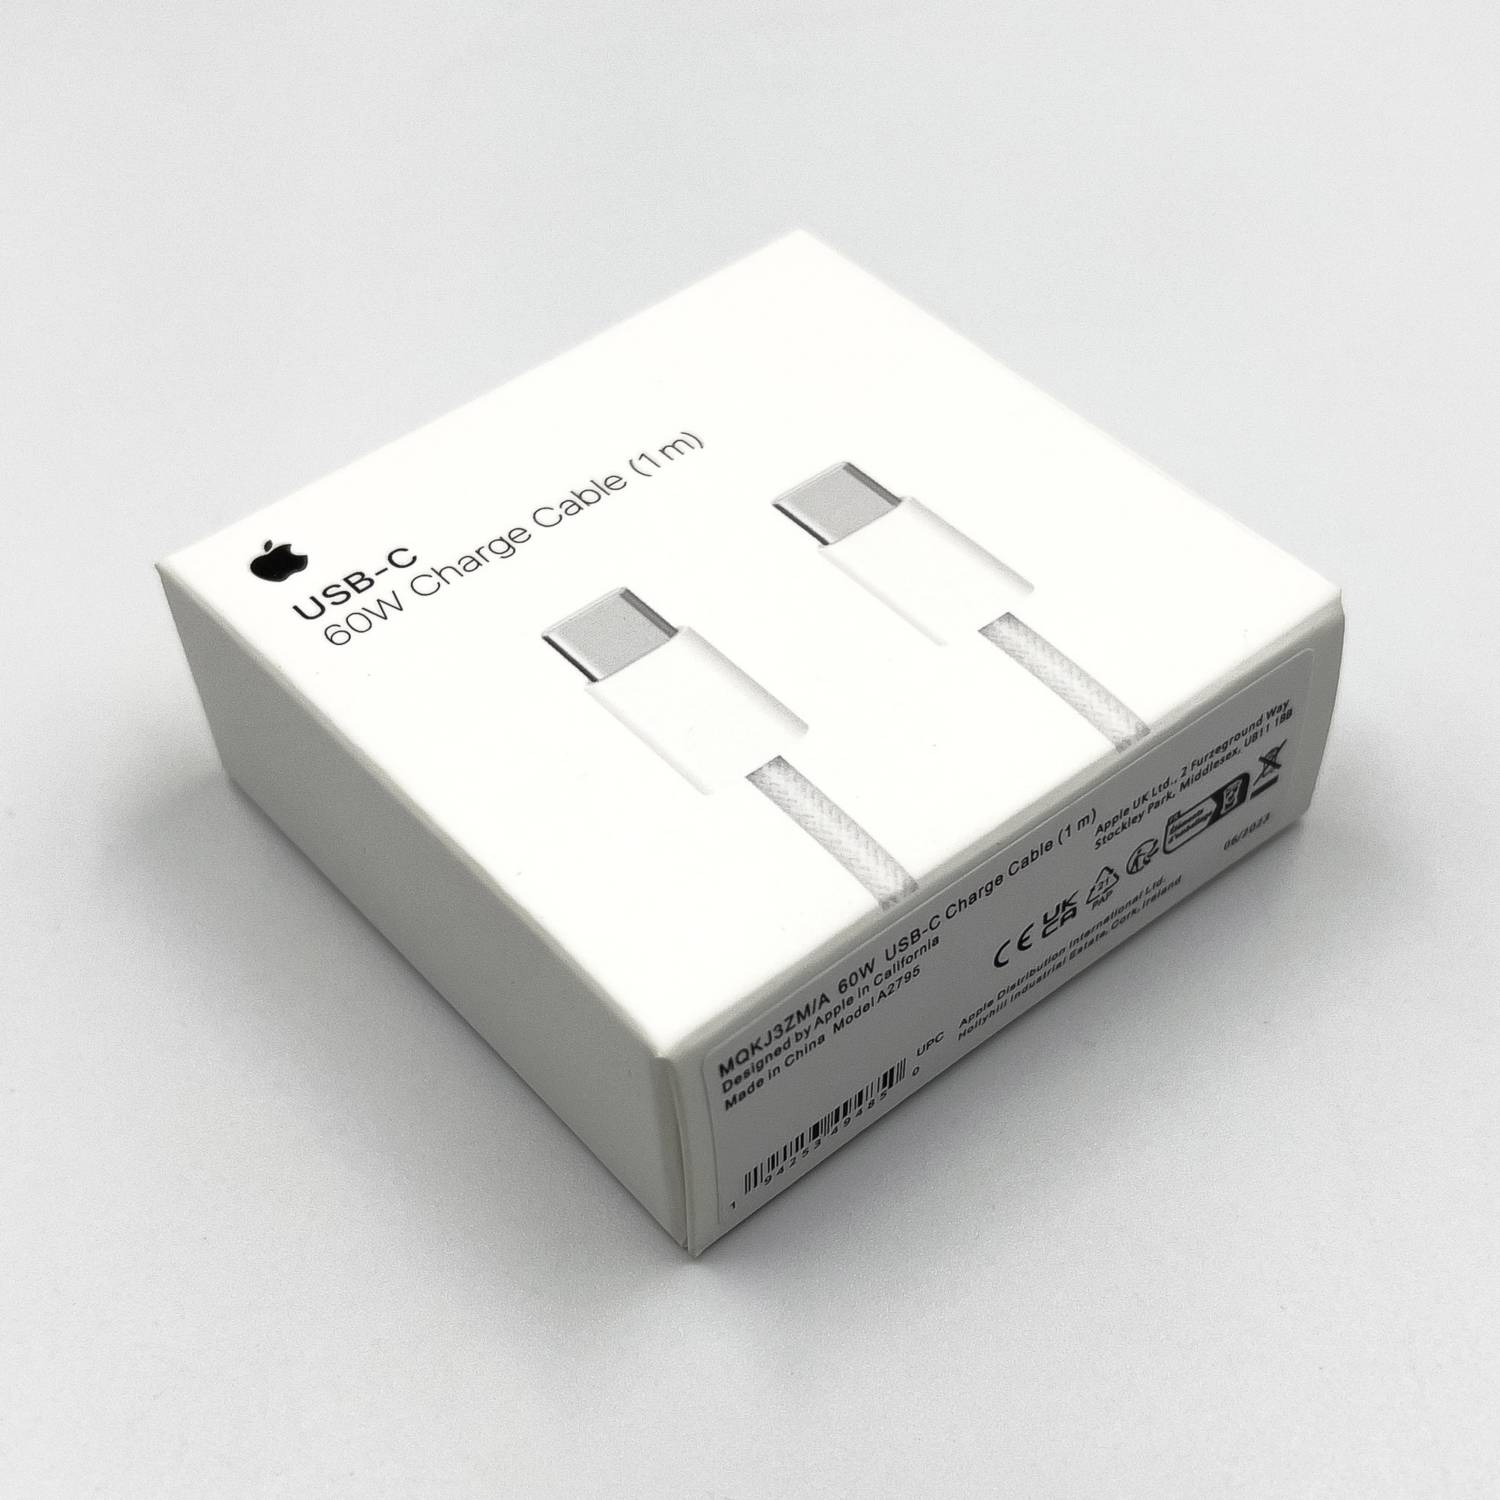 Cable de iPhone original Lightning USB-C de 1M Apple — Tiendanexus